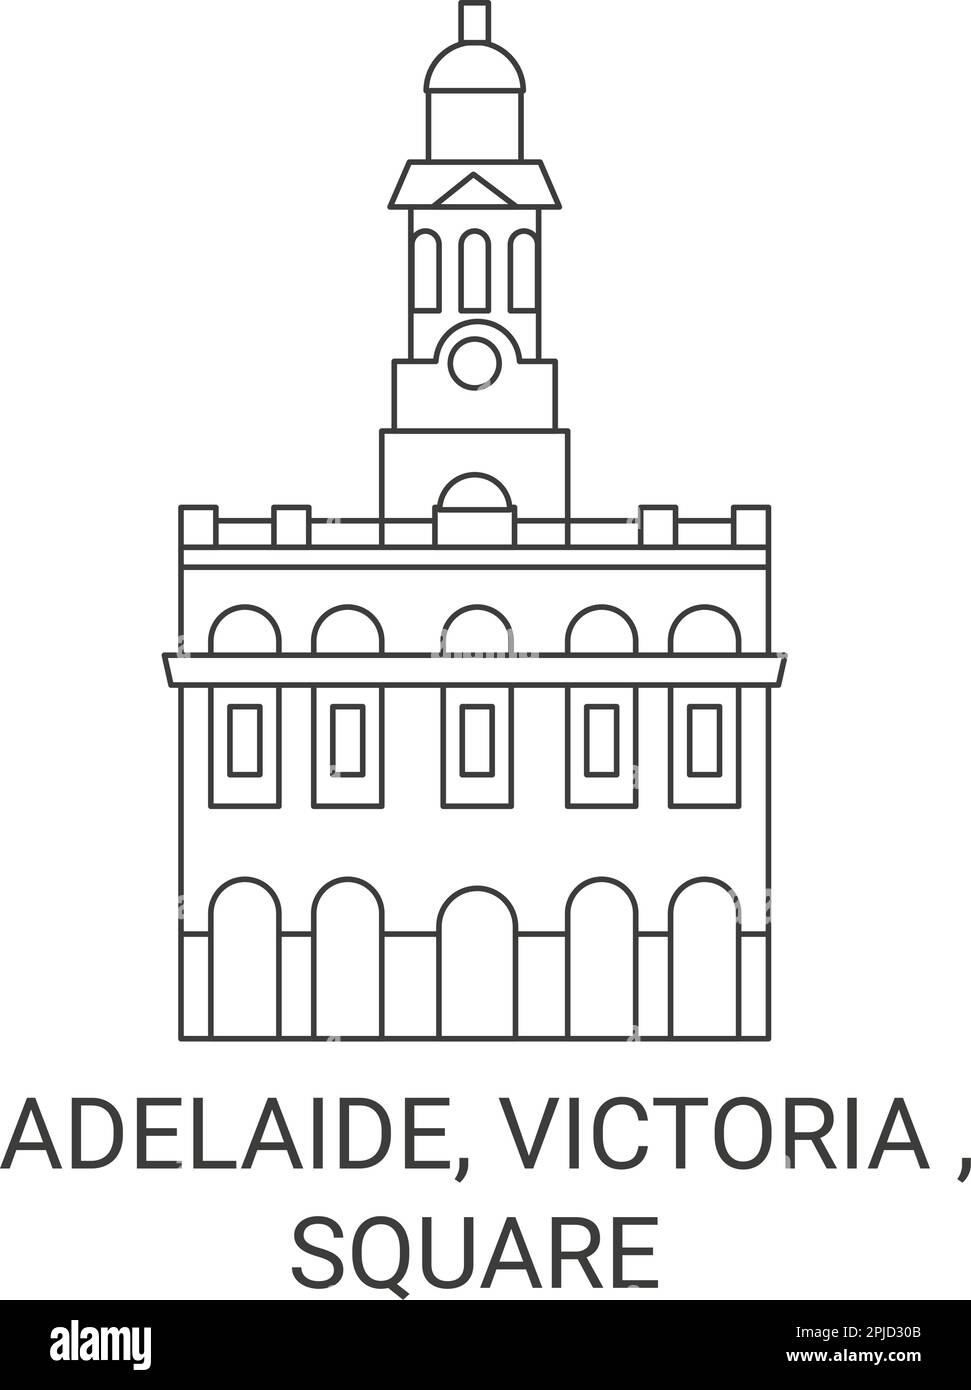 Australia, Adelaide, Victoria , Square travel landmark vector illustration Stock Vector